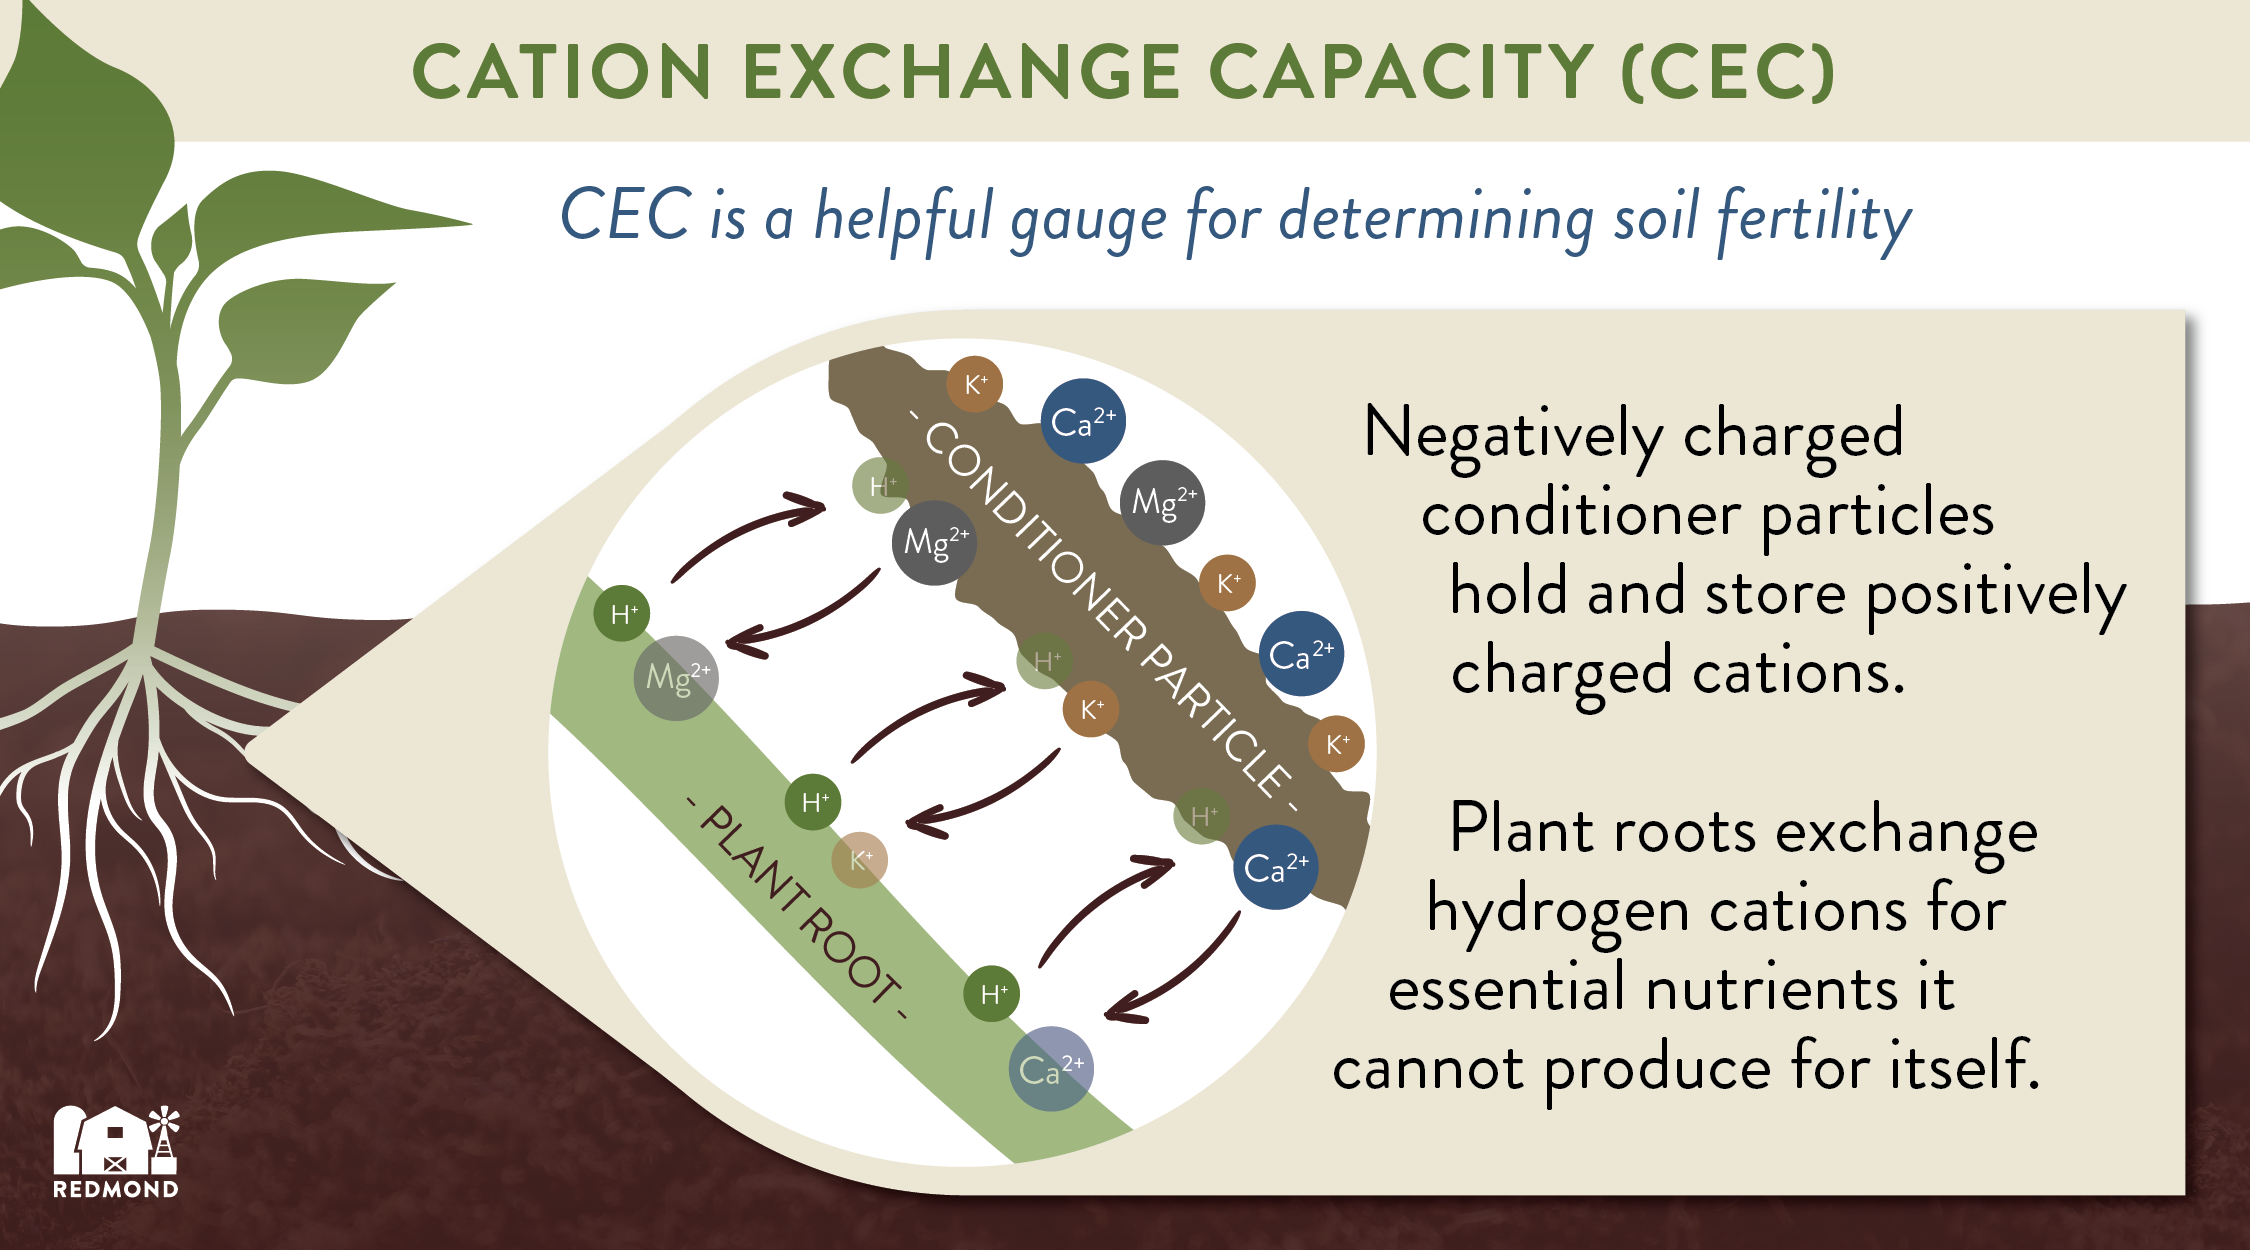 Cation exchange capacity